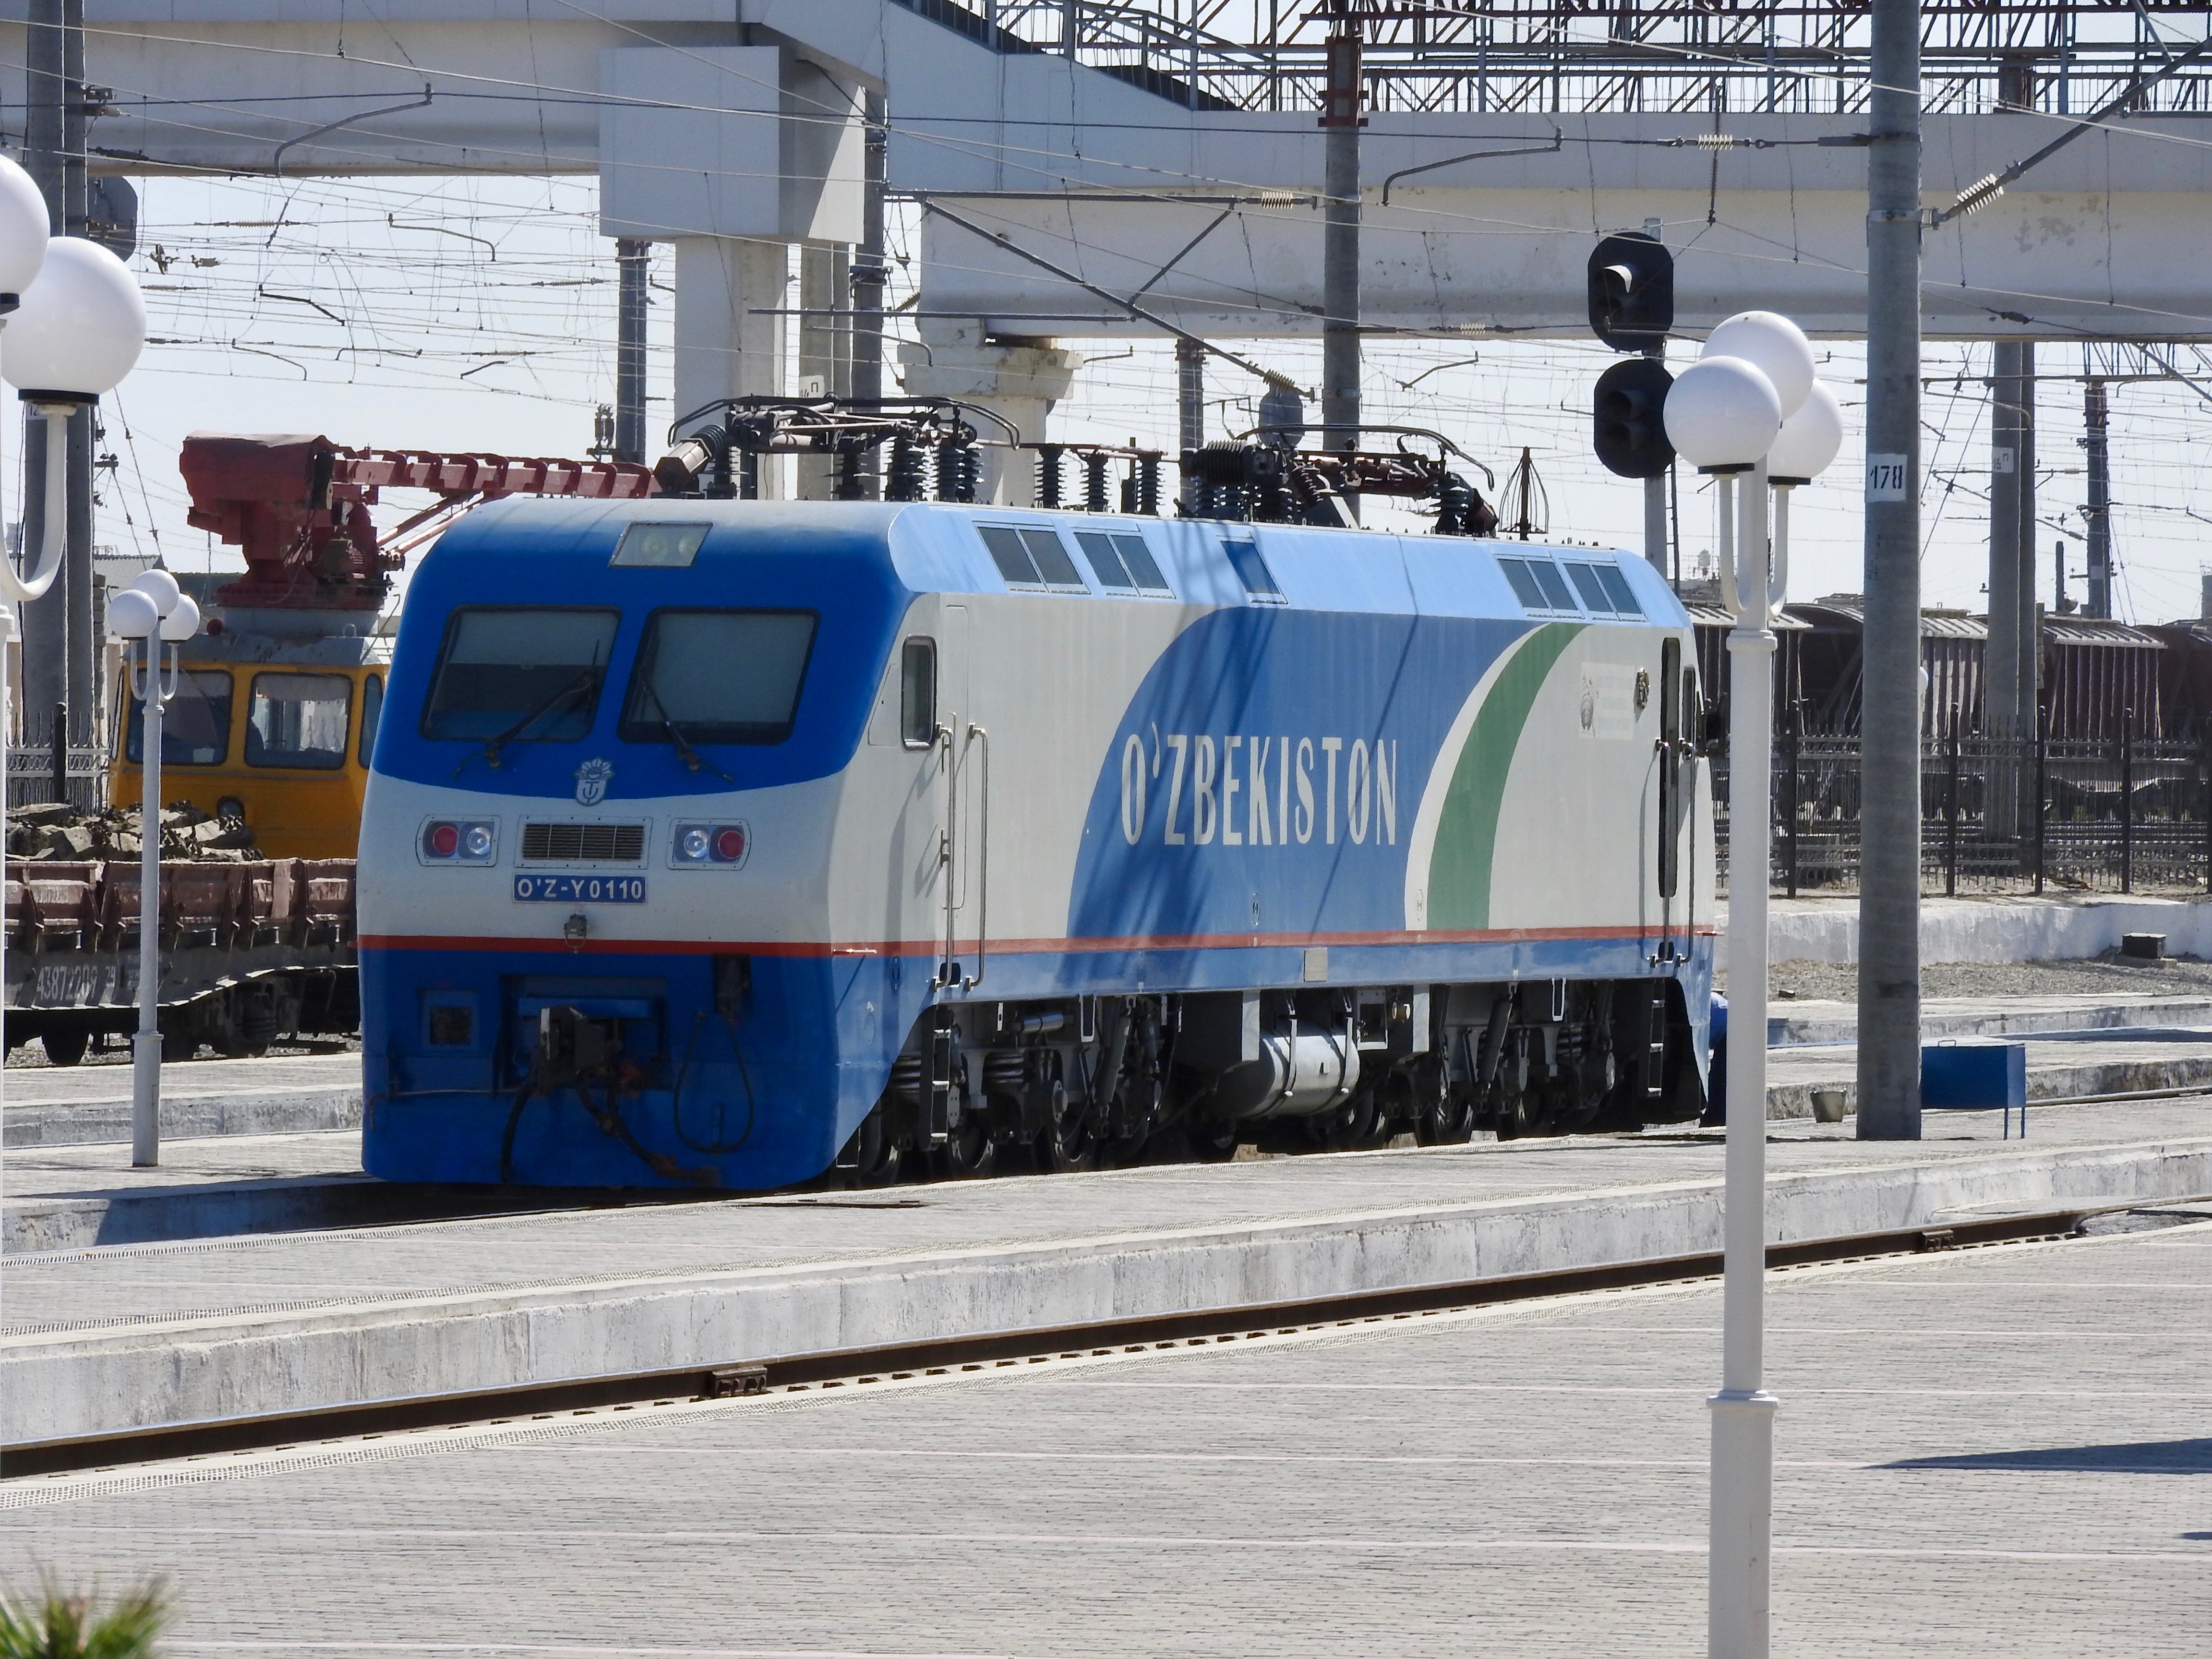 Tuesday Train – Loco at Bukhara Station in Uzbekistan